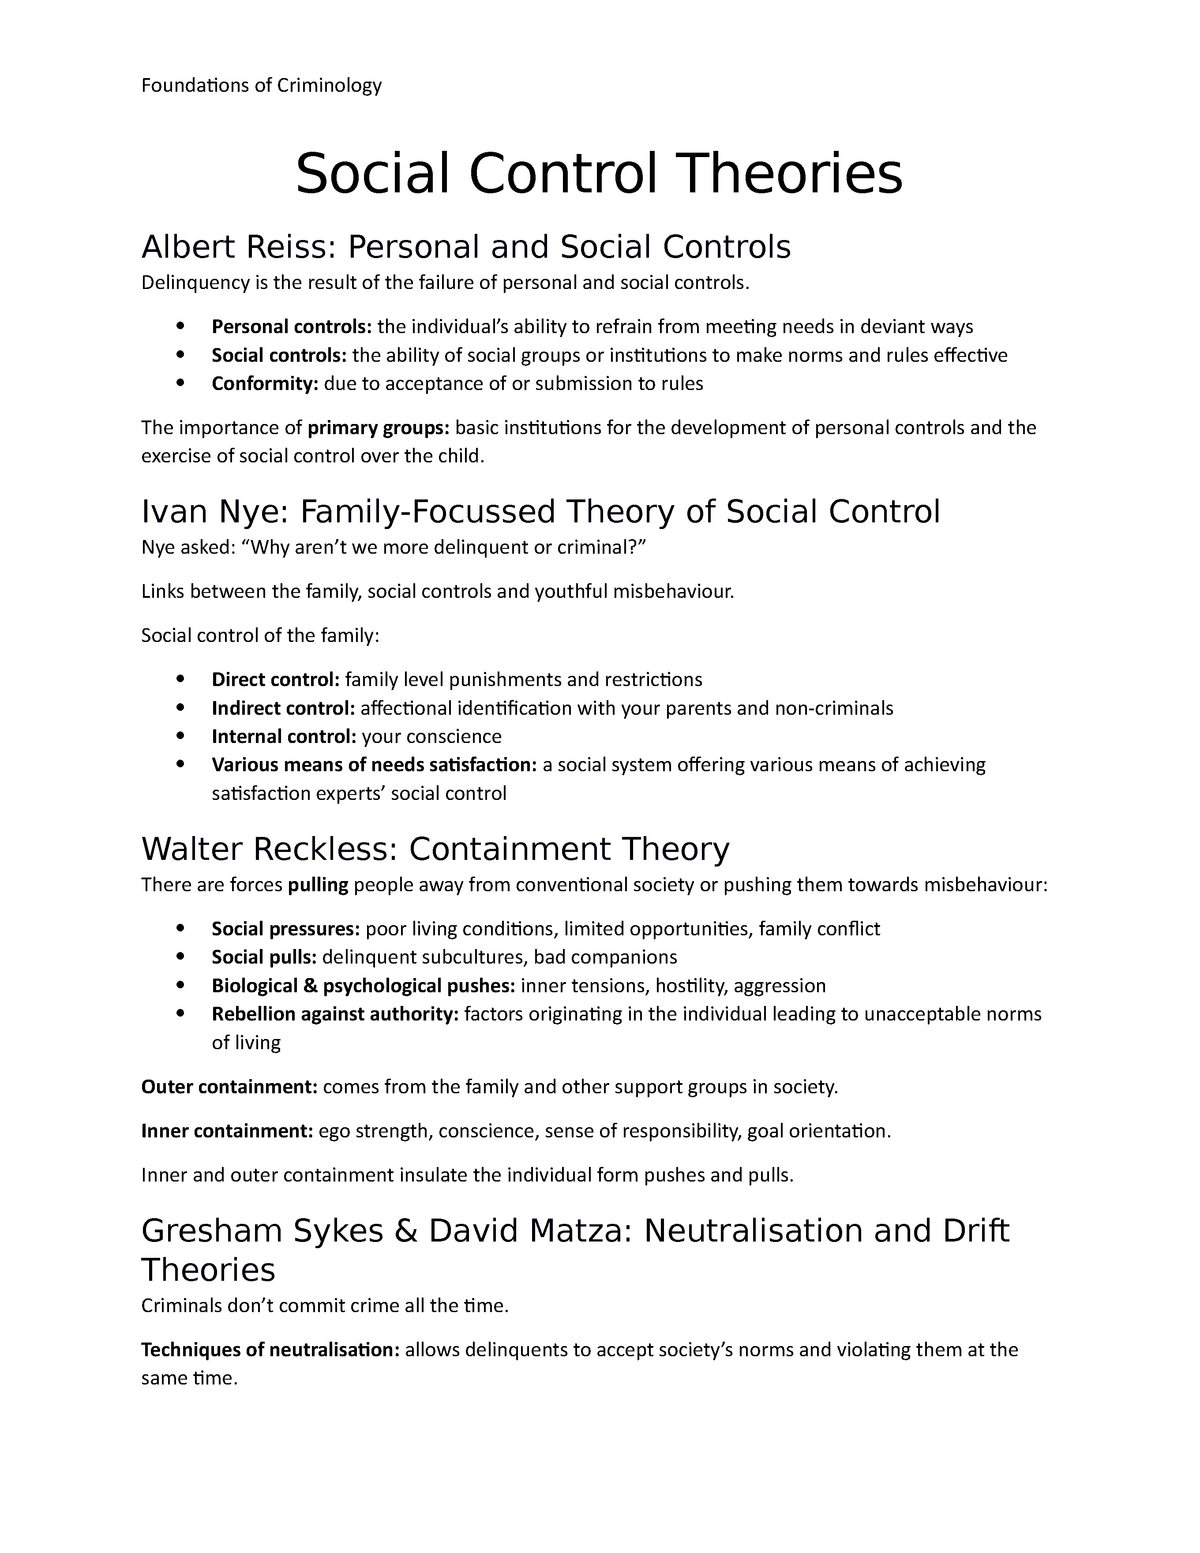 social control theory essay